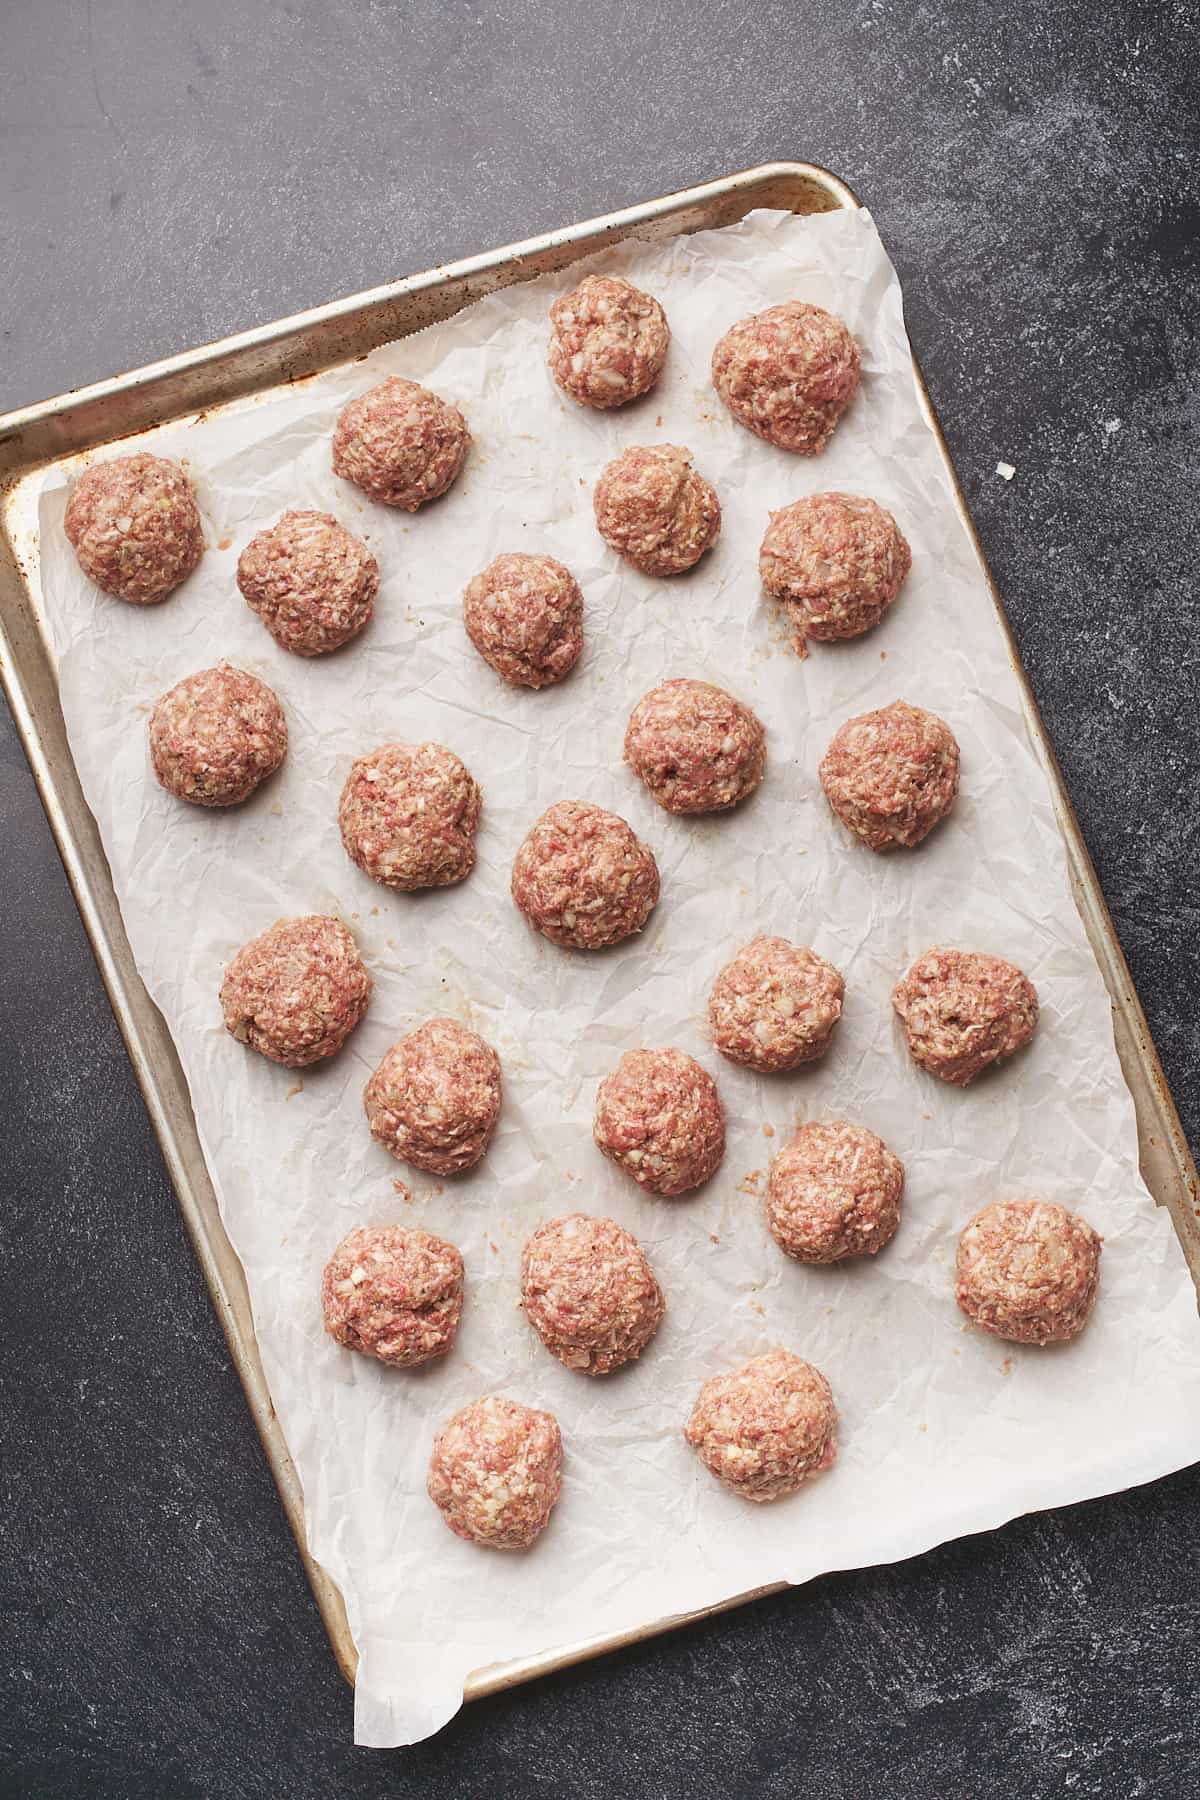 24 raw meatballs on a baking sheet.